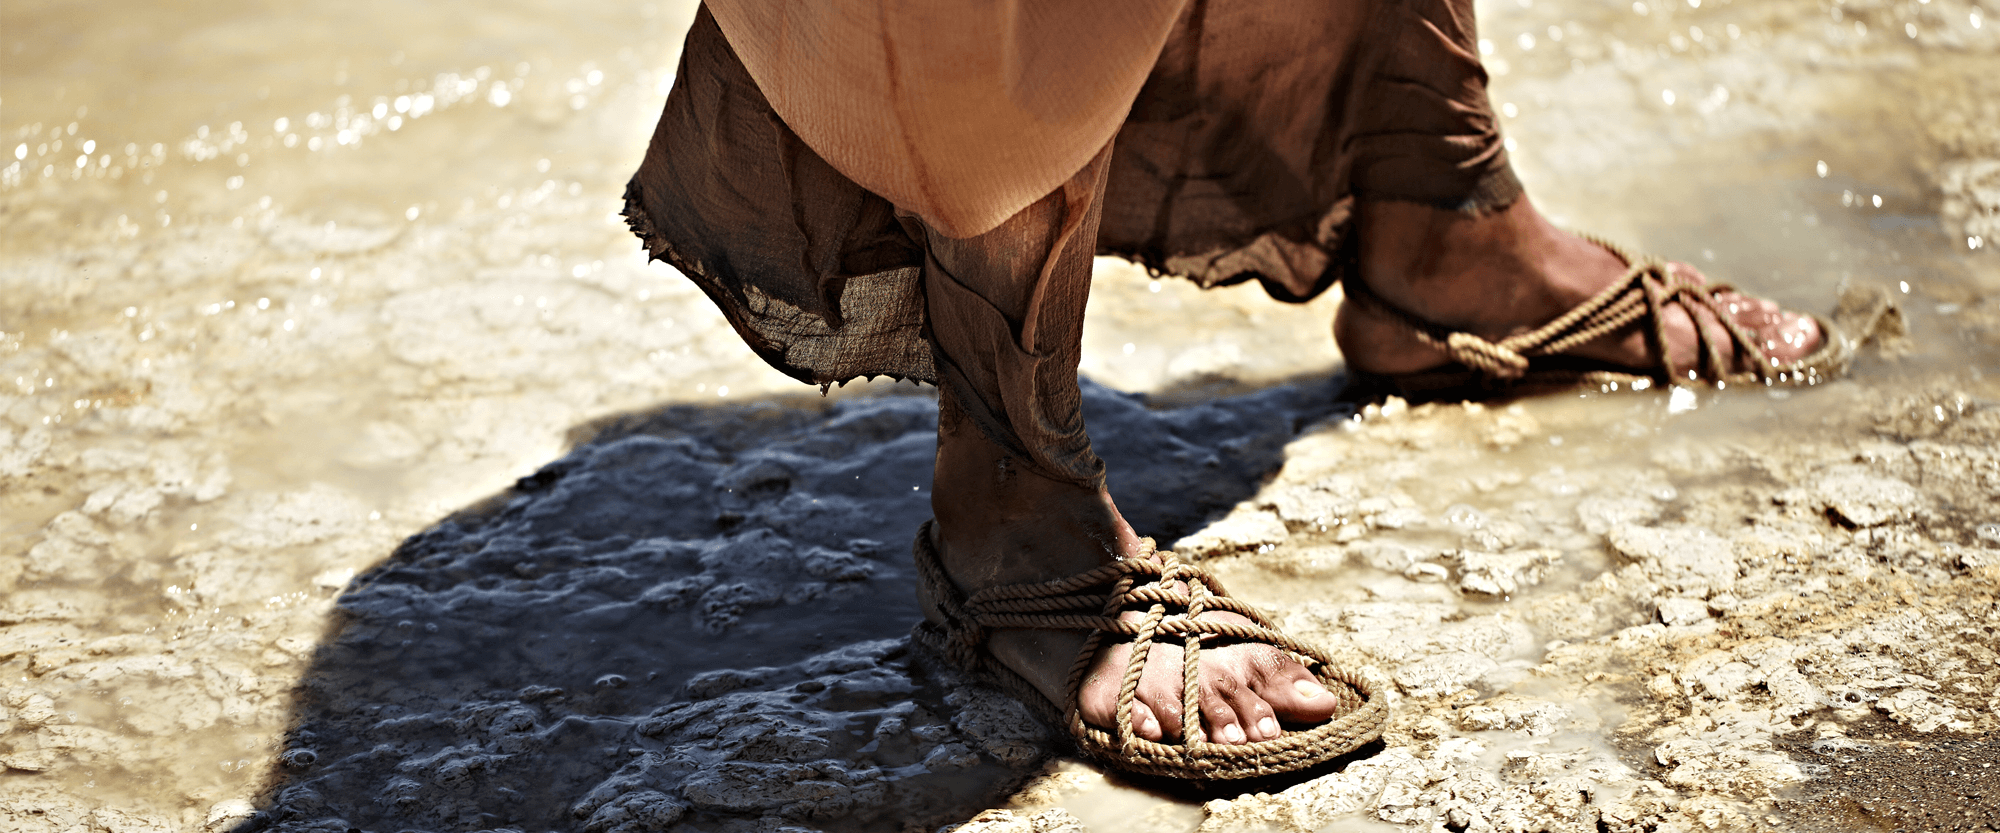 Sandaled feet on bank of river